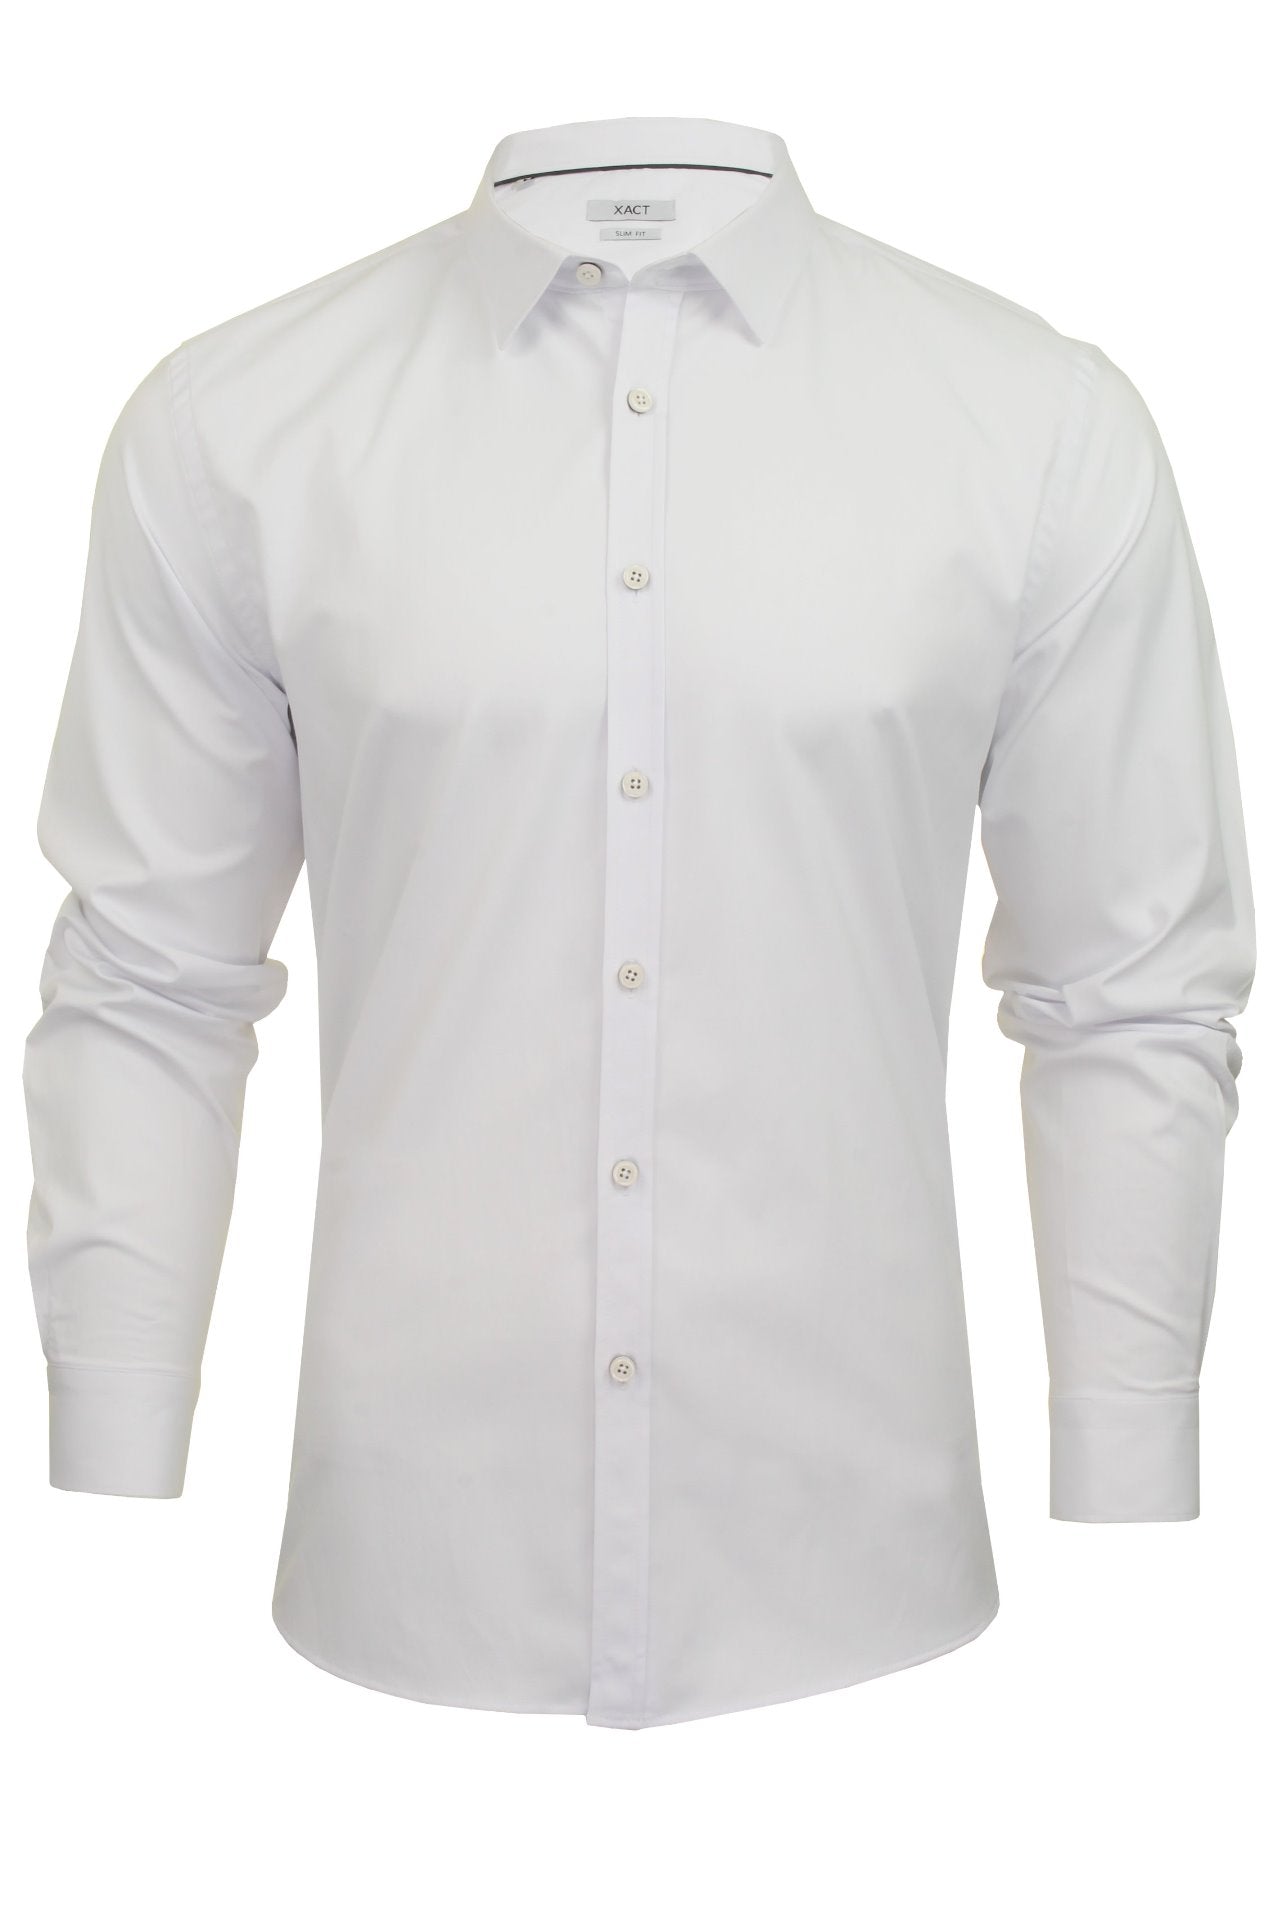 Xact Mens Long Sleeved Poplin Stretch Shirt - Slim Fit-Main Image